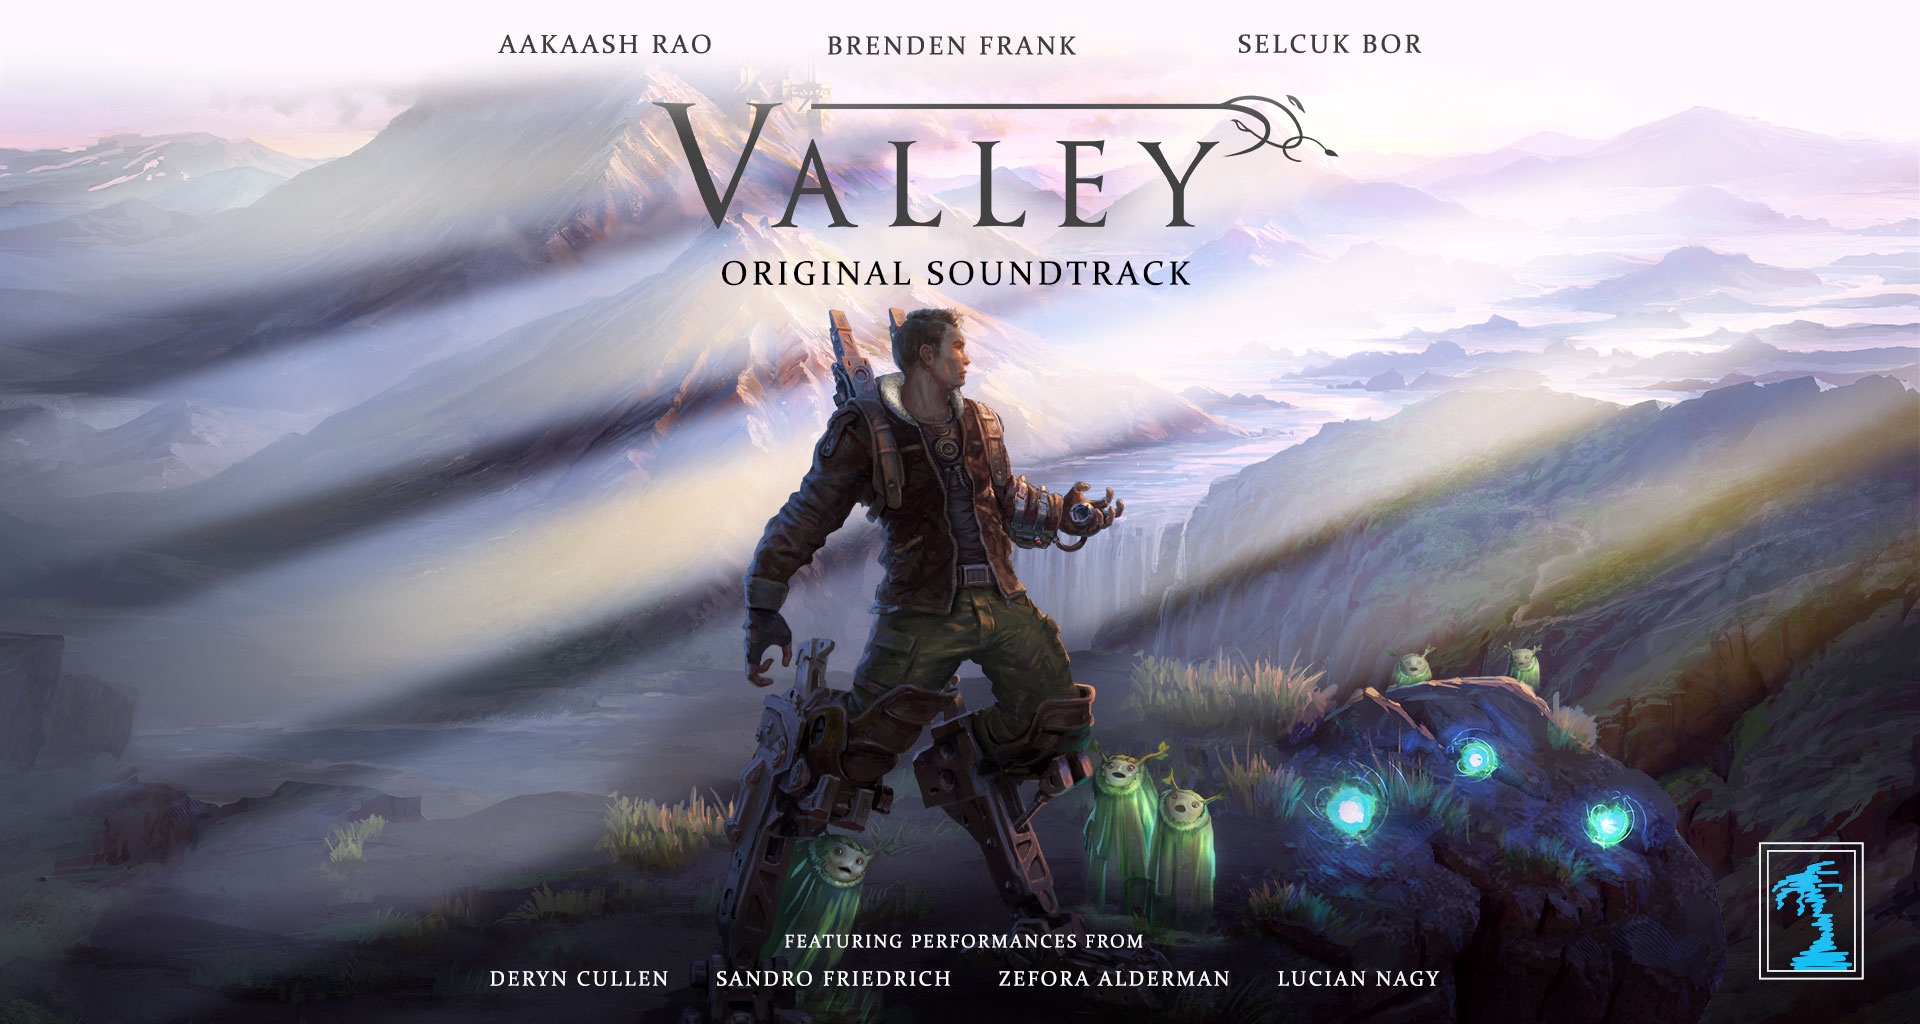 Stardew Valley Soundtrack Price history · SteamDB